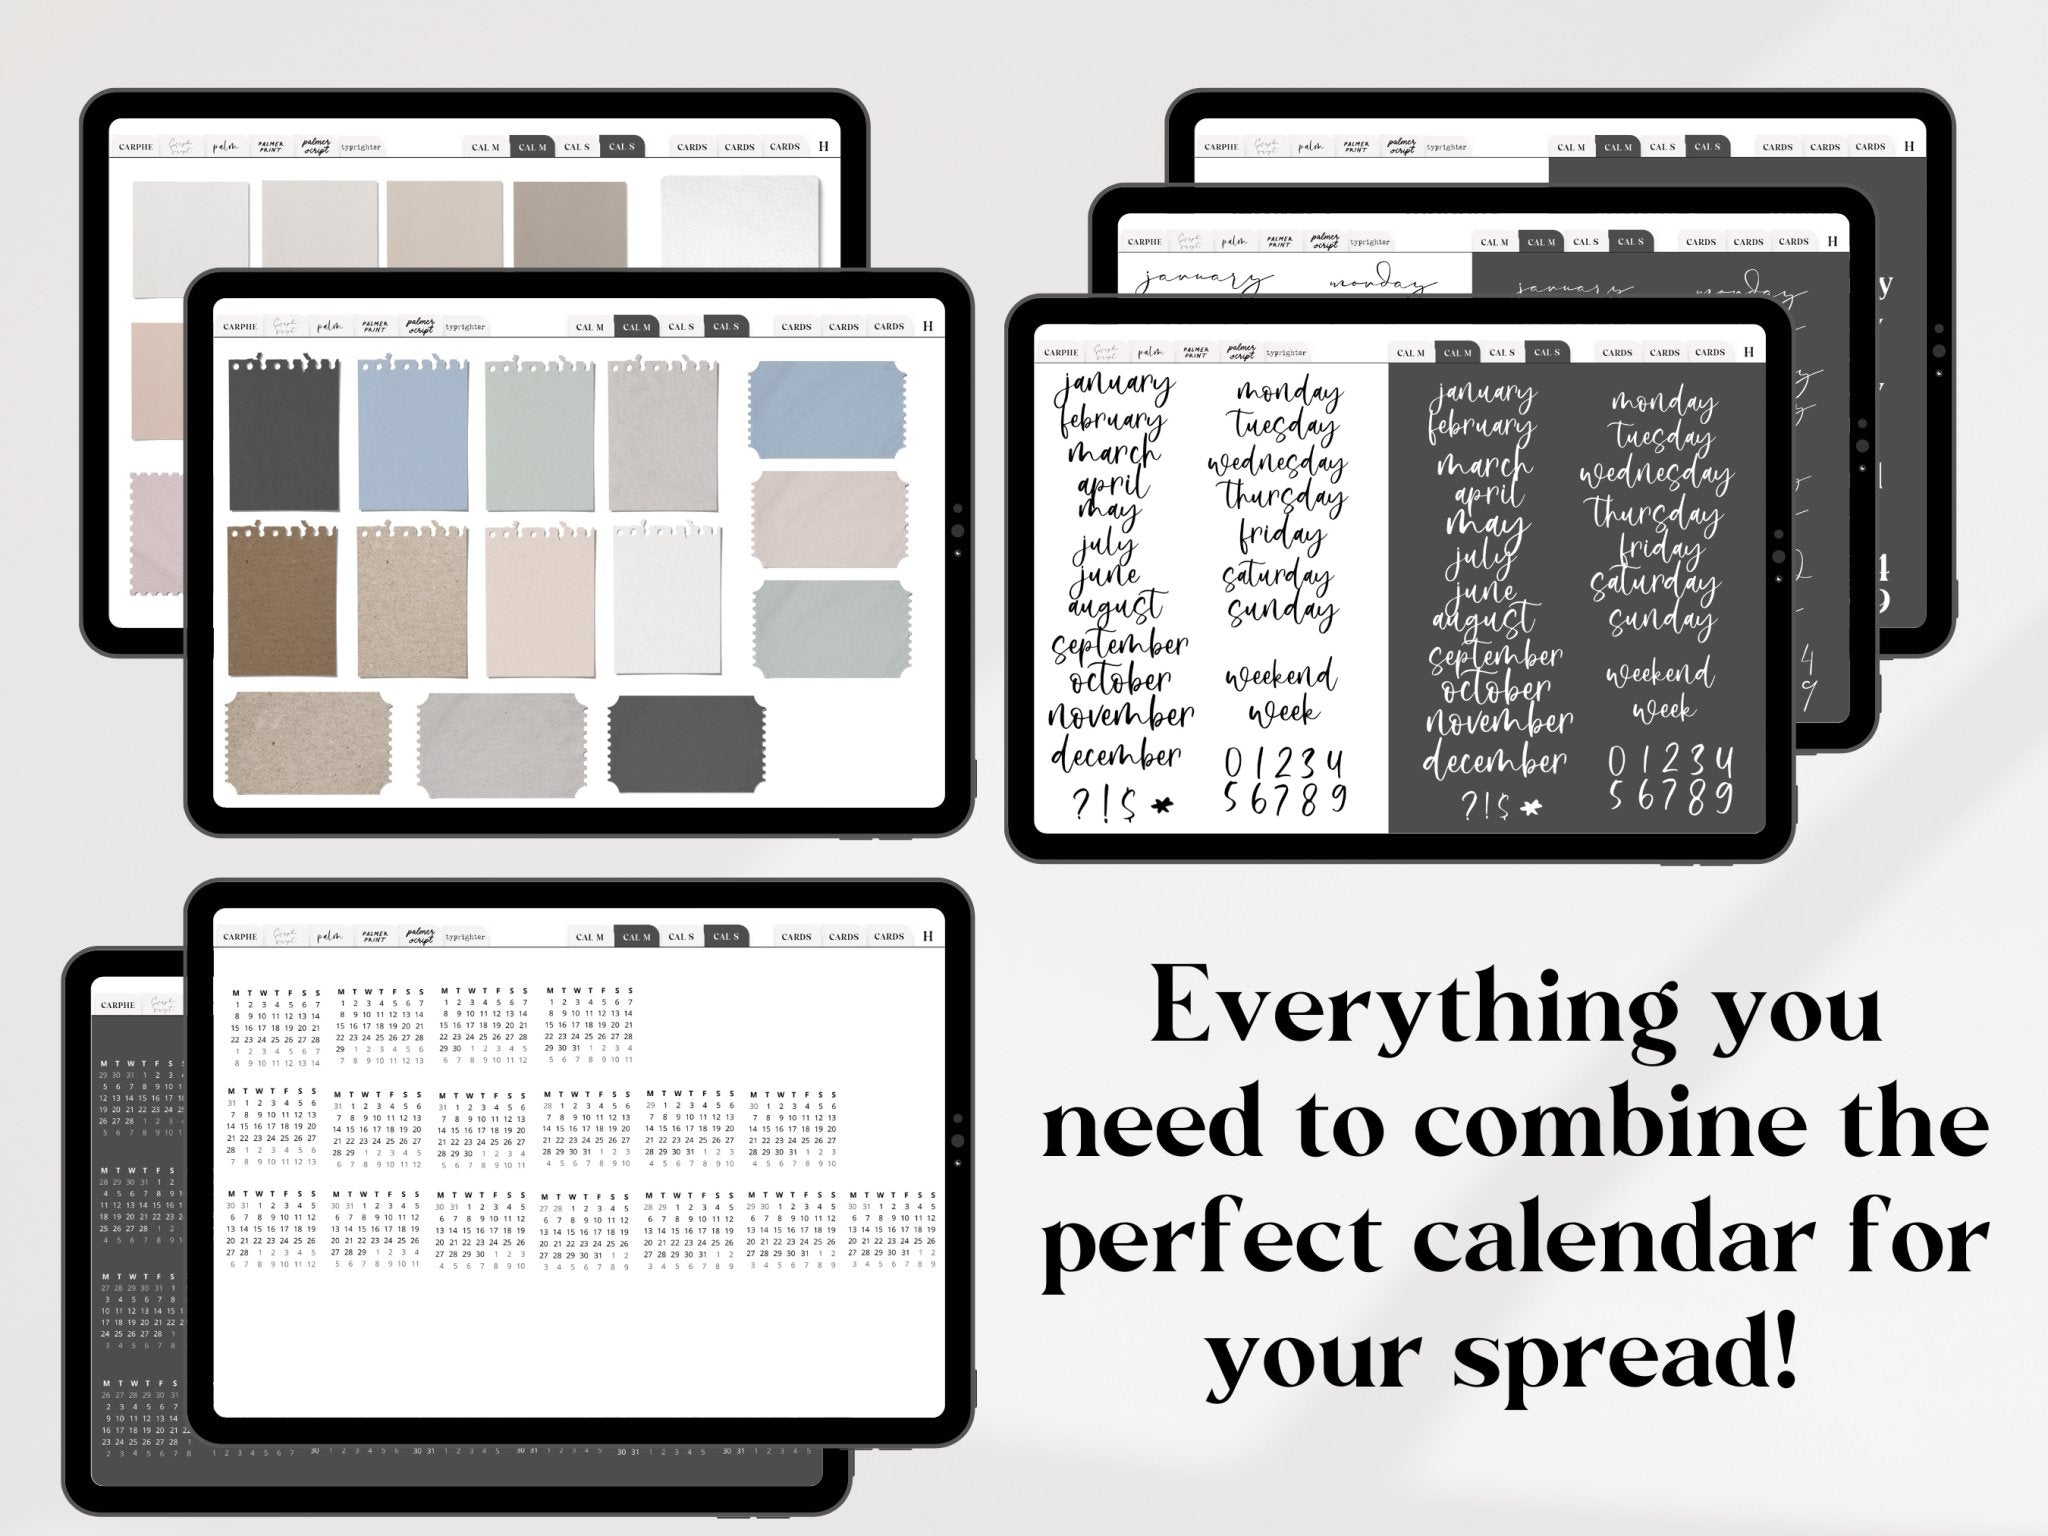 The Complete Calendar Kit